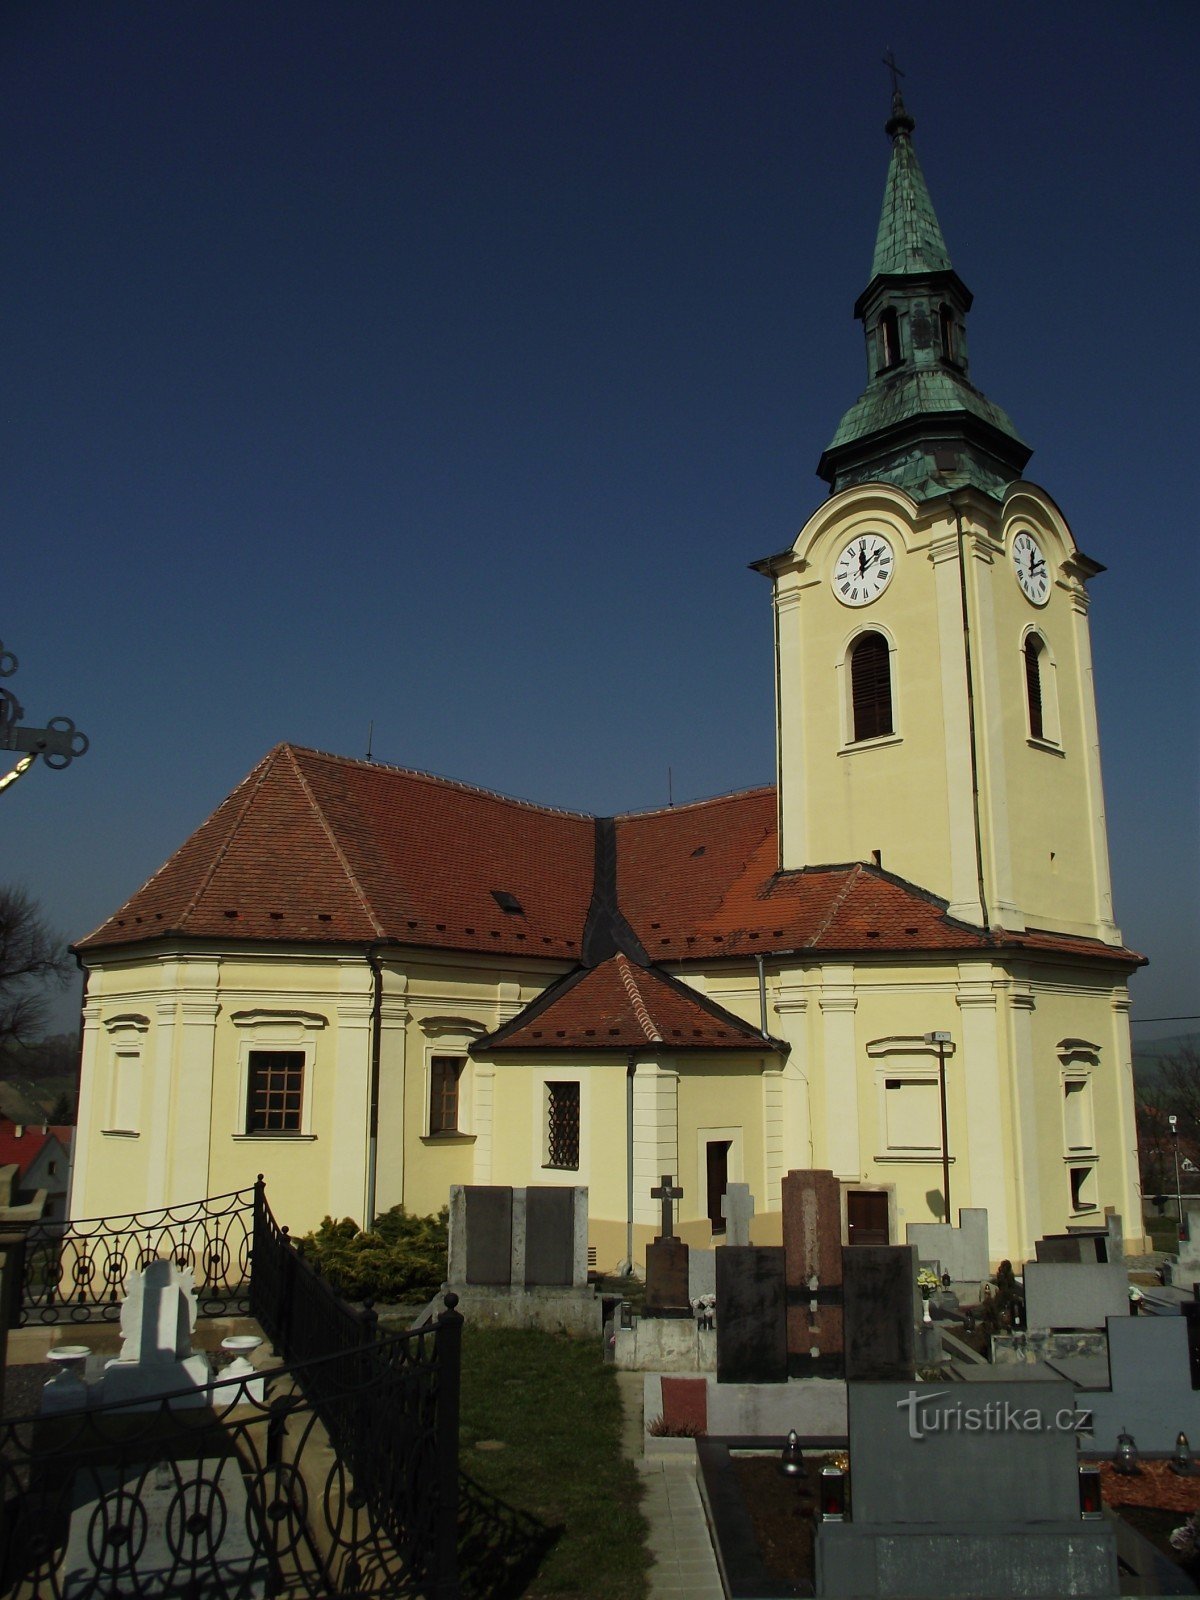 Bílovice - church of St. John the Baptist